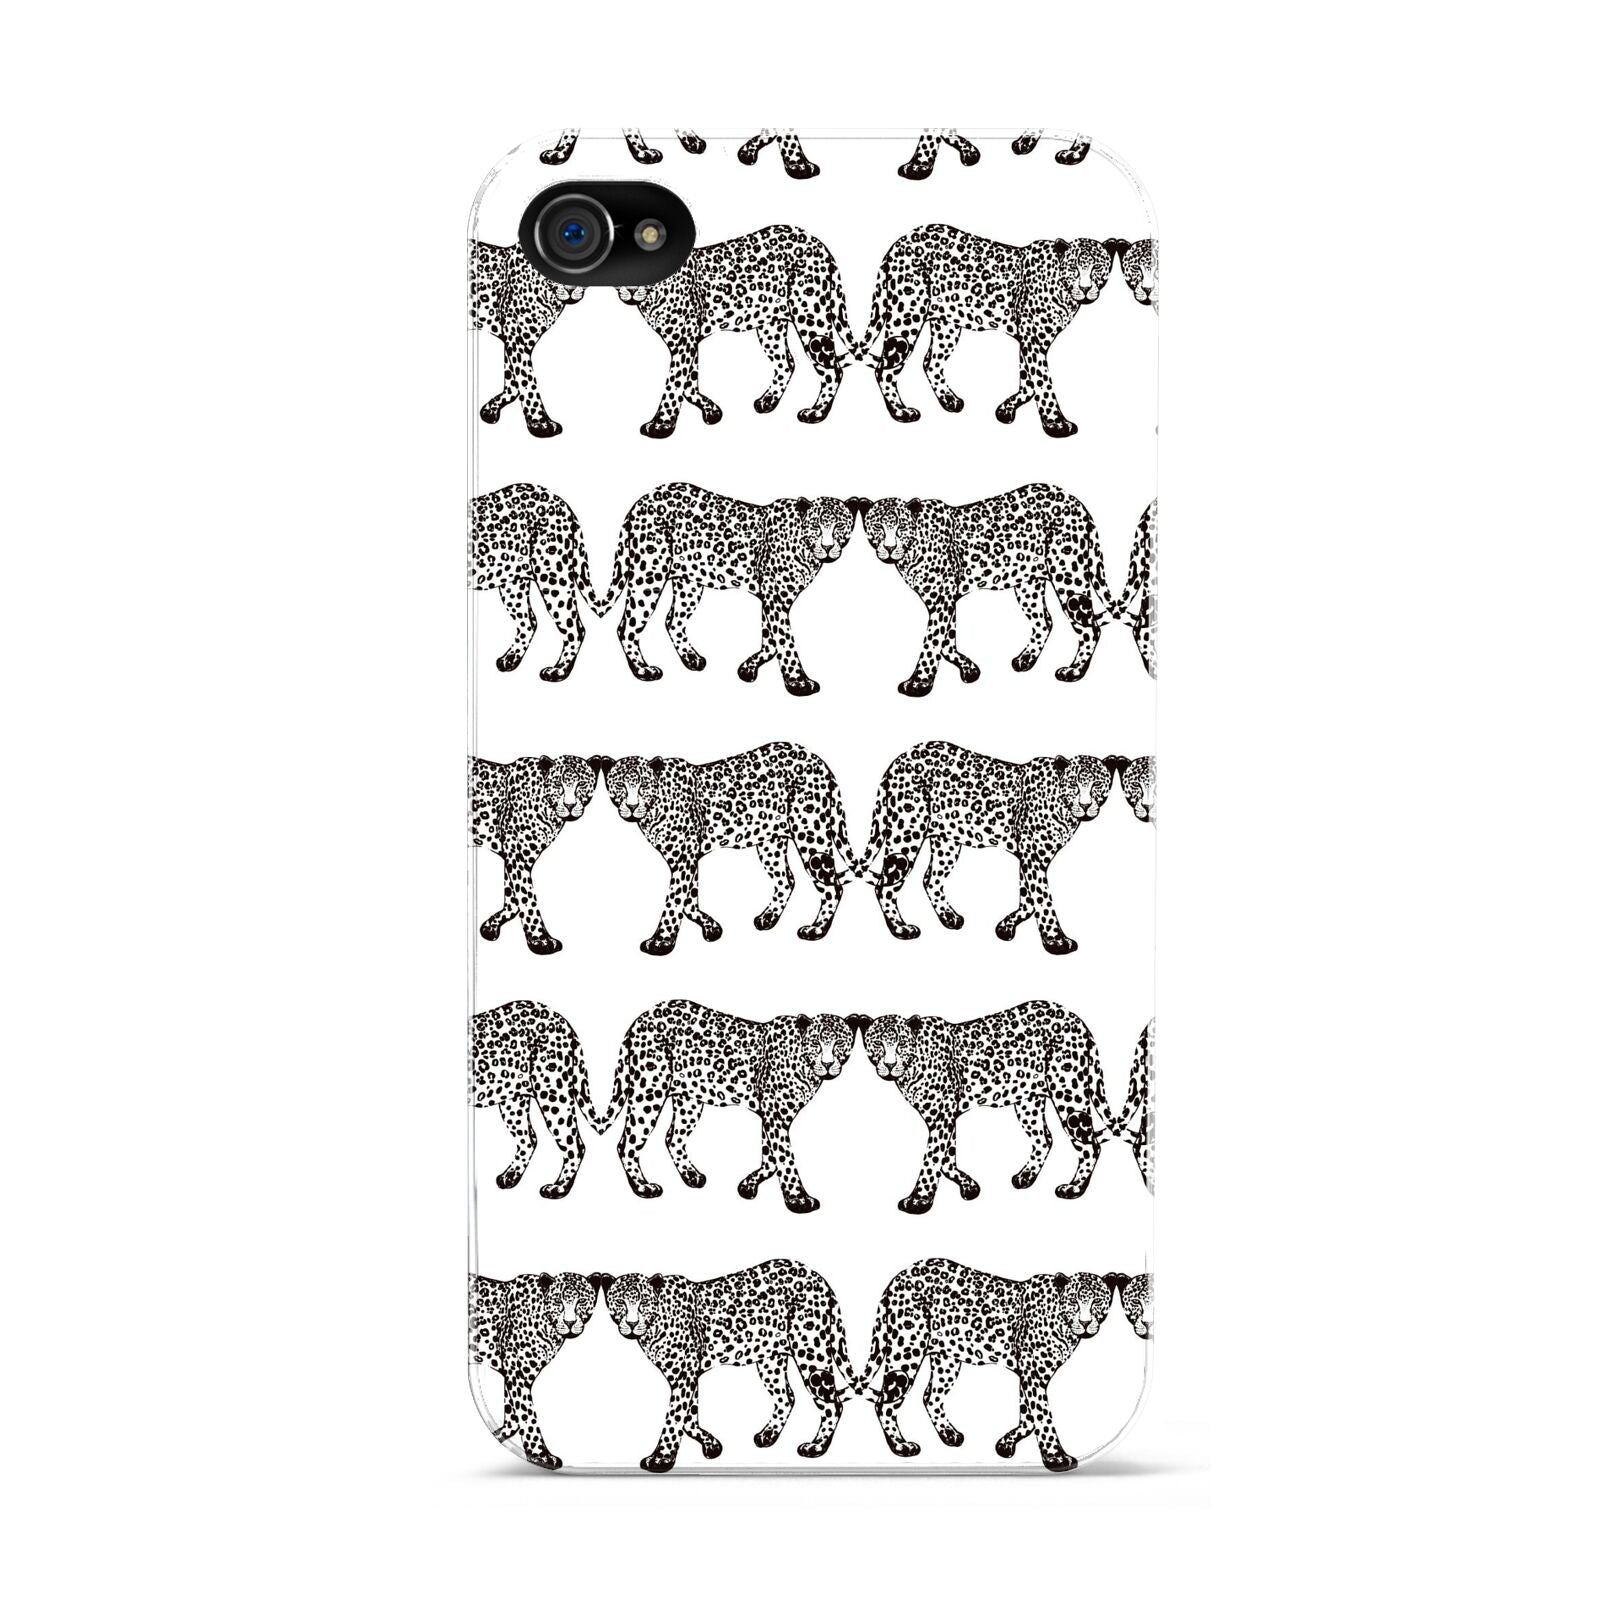 Monochrome Mirrored Leopard Print Apple iPhone 4s Case